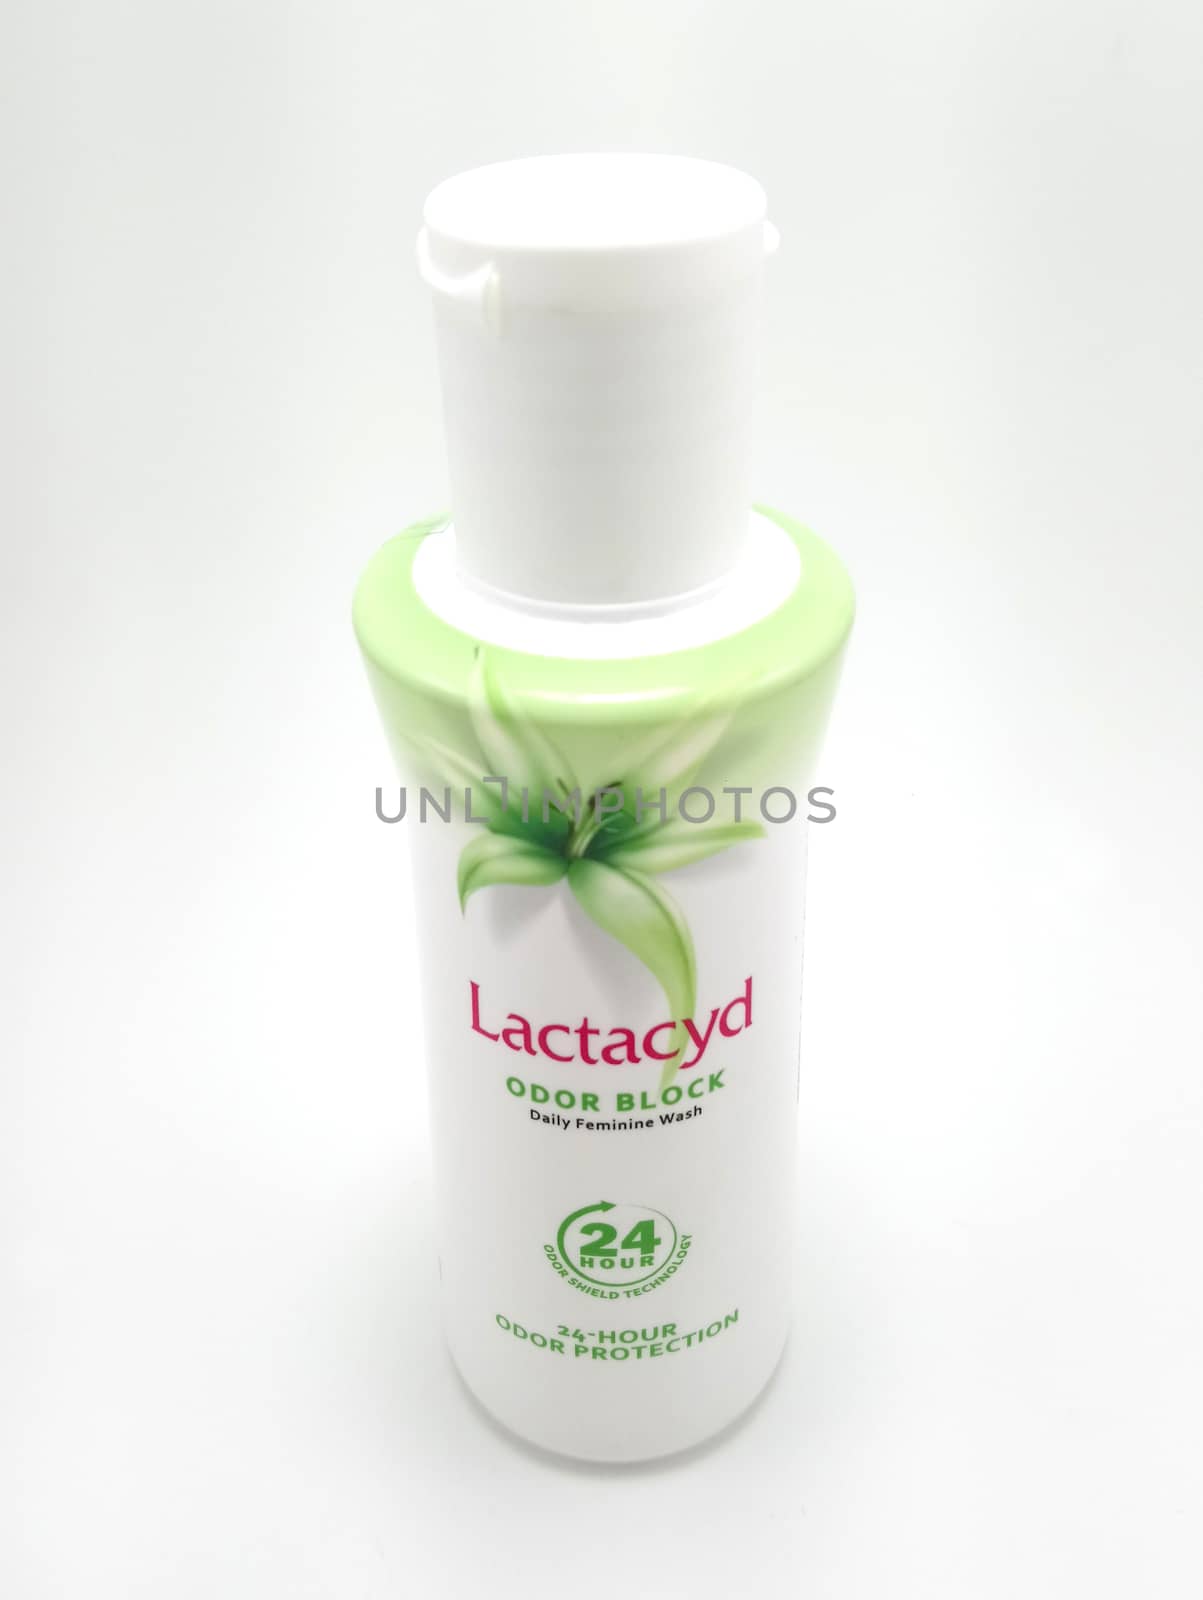 Lactacyd feminine wash odor block bottle in Manila, Philippines by imwaltersy